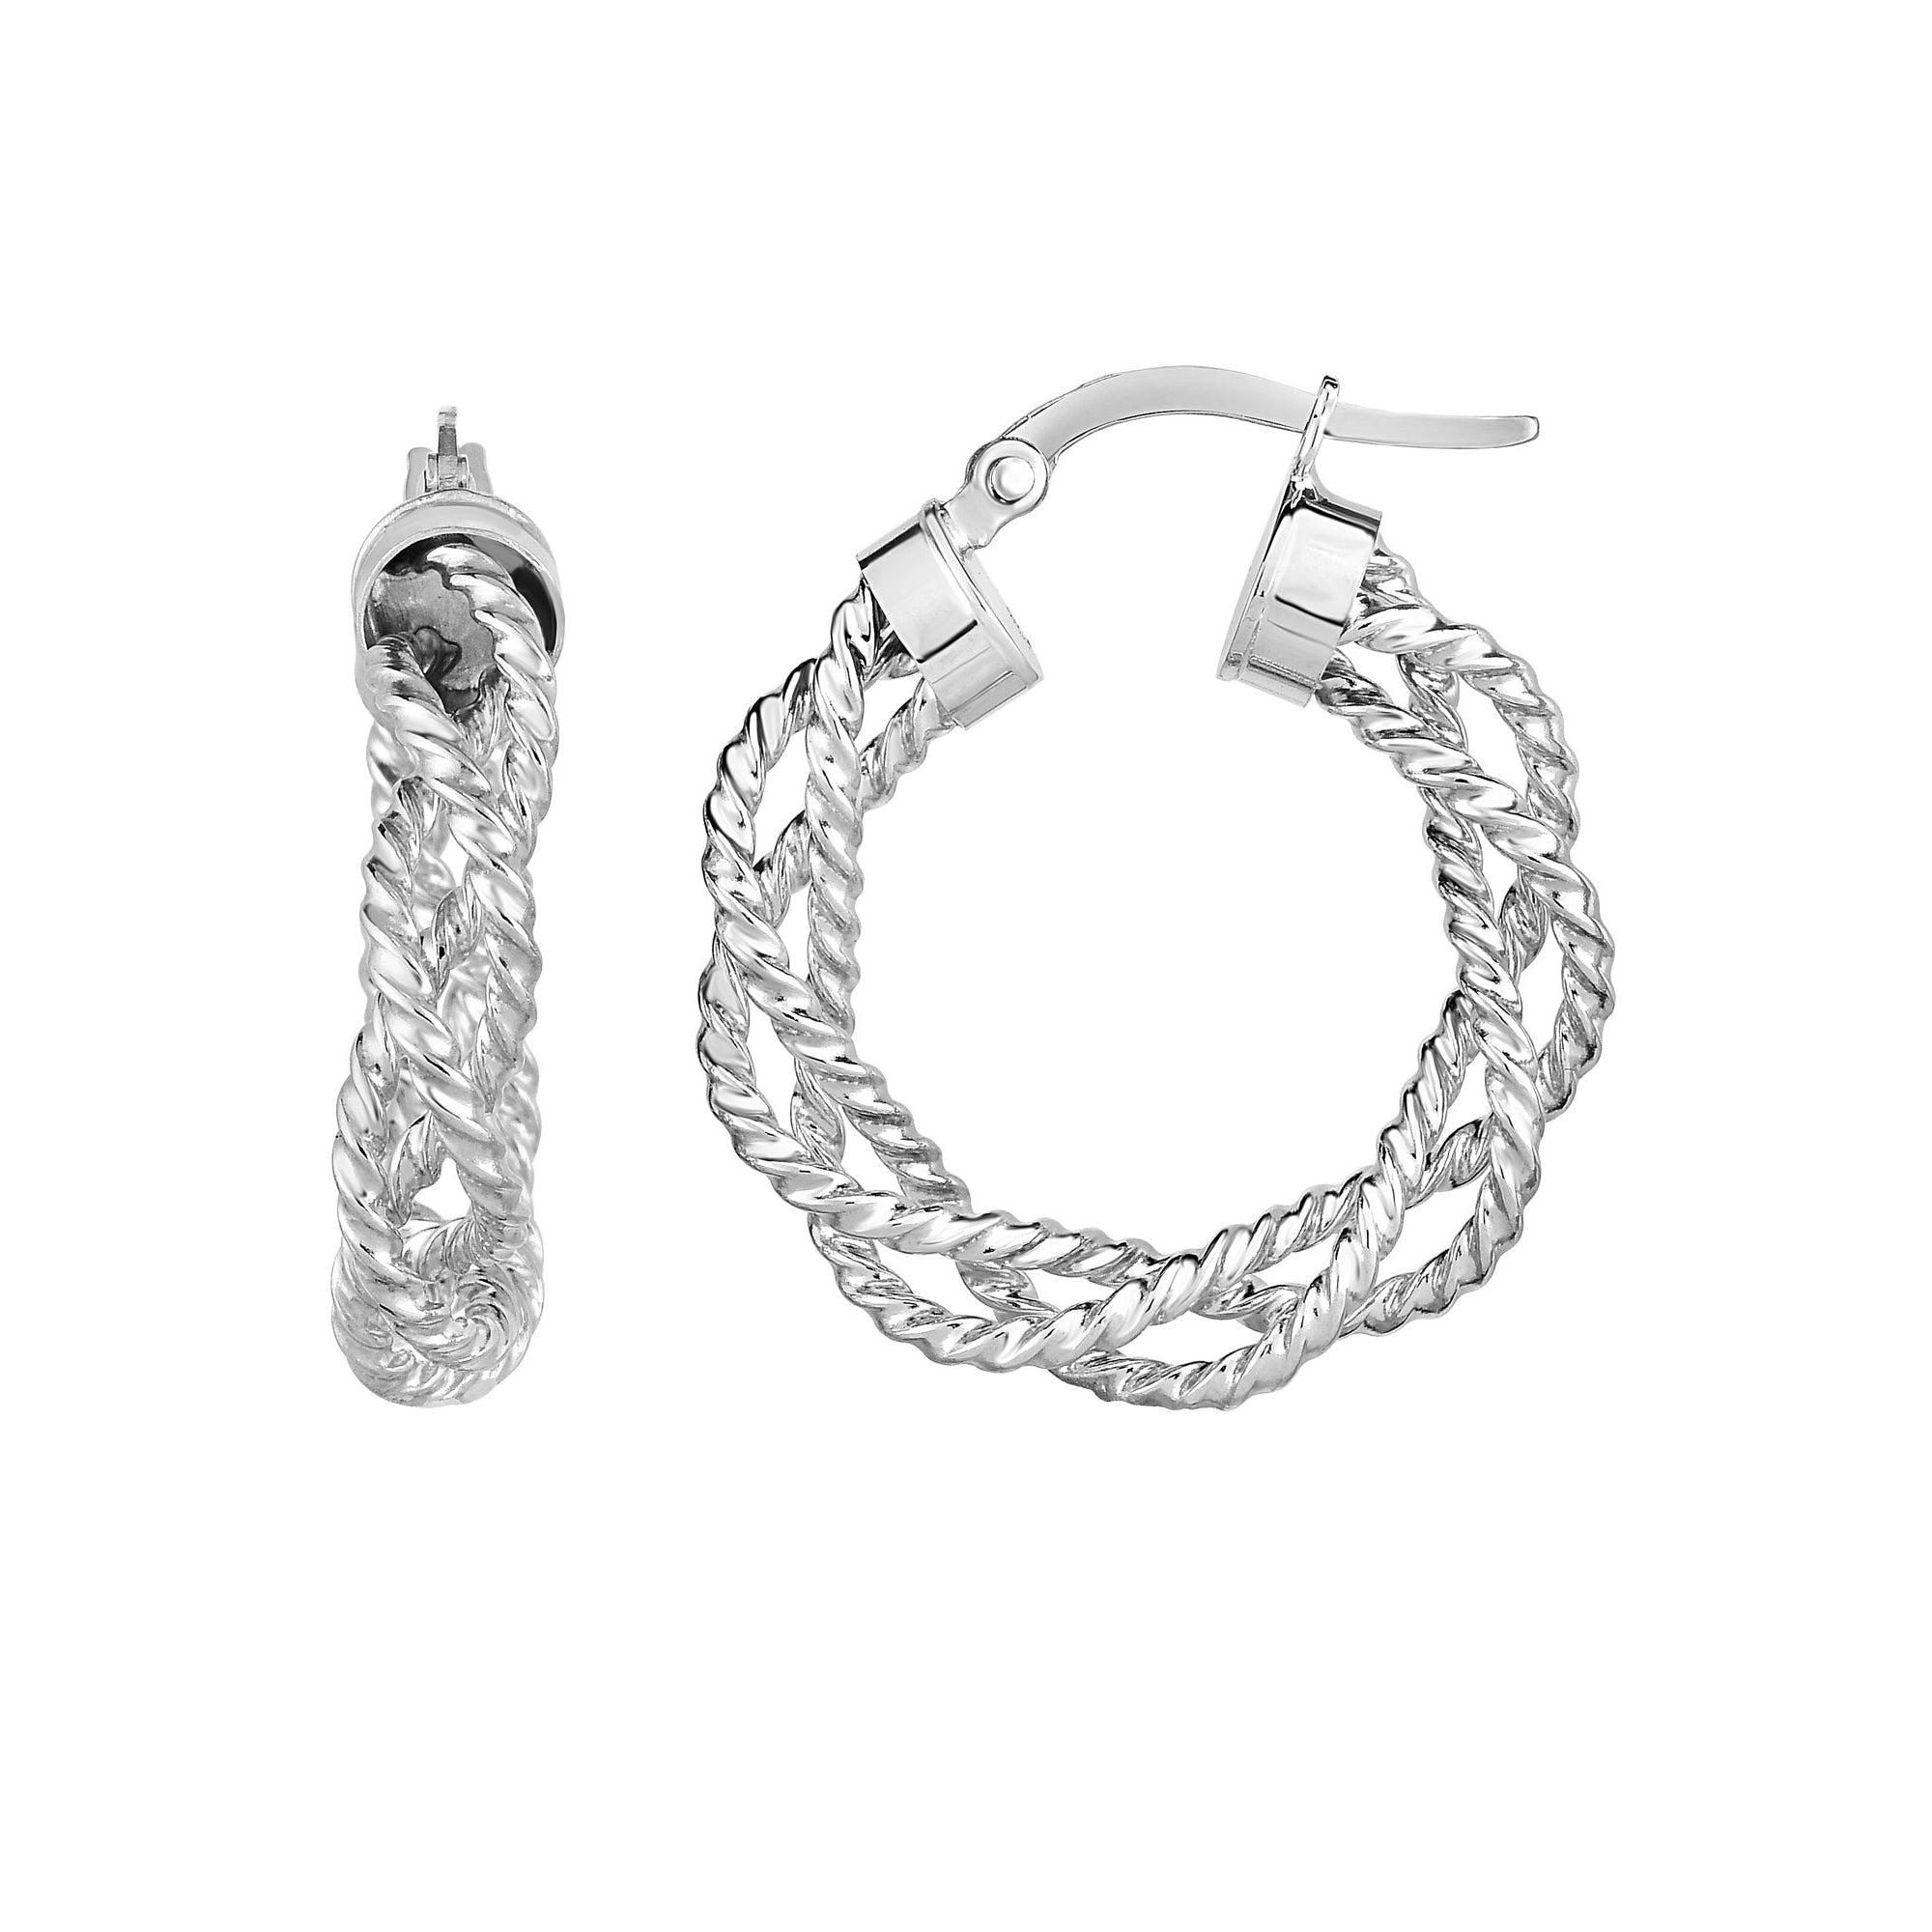 14K Gold Twisted Hoop Earring, Diameter 22mm fine designer jewelry for men and women